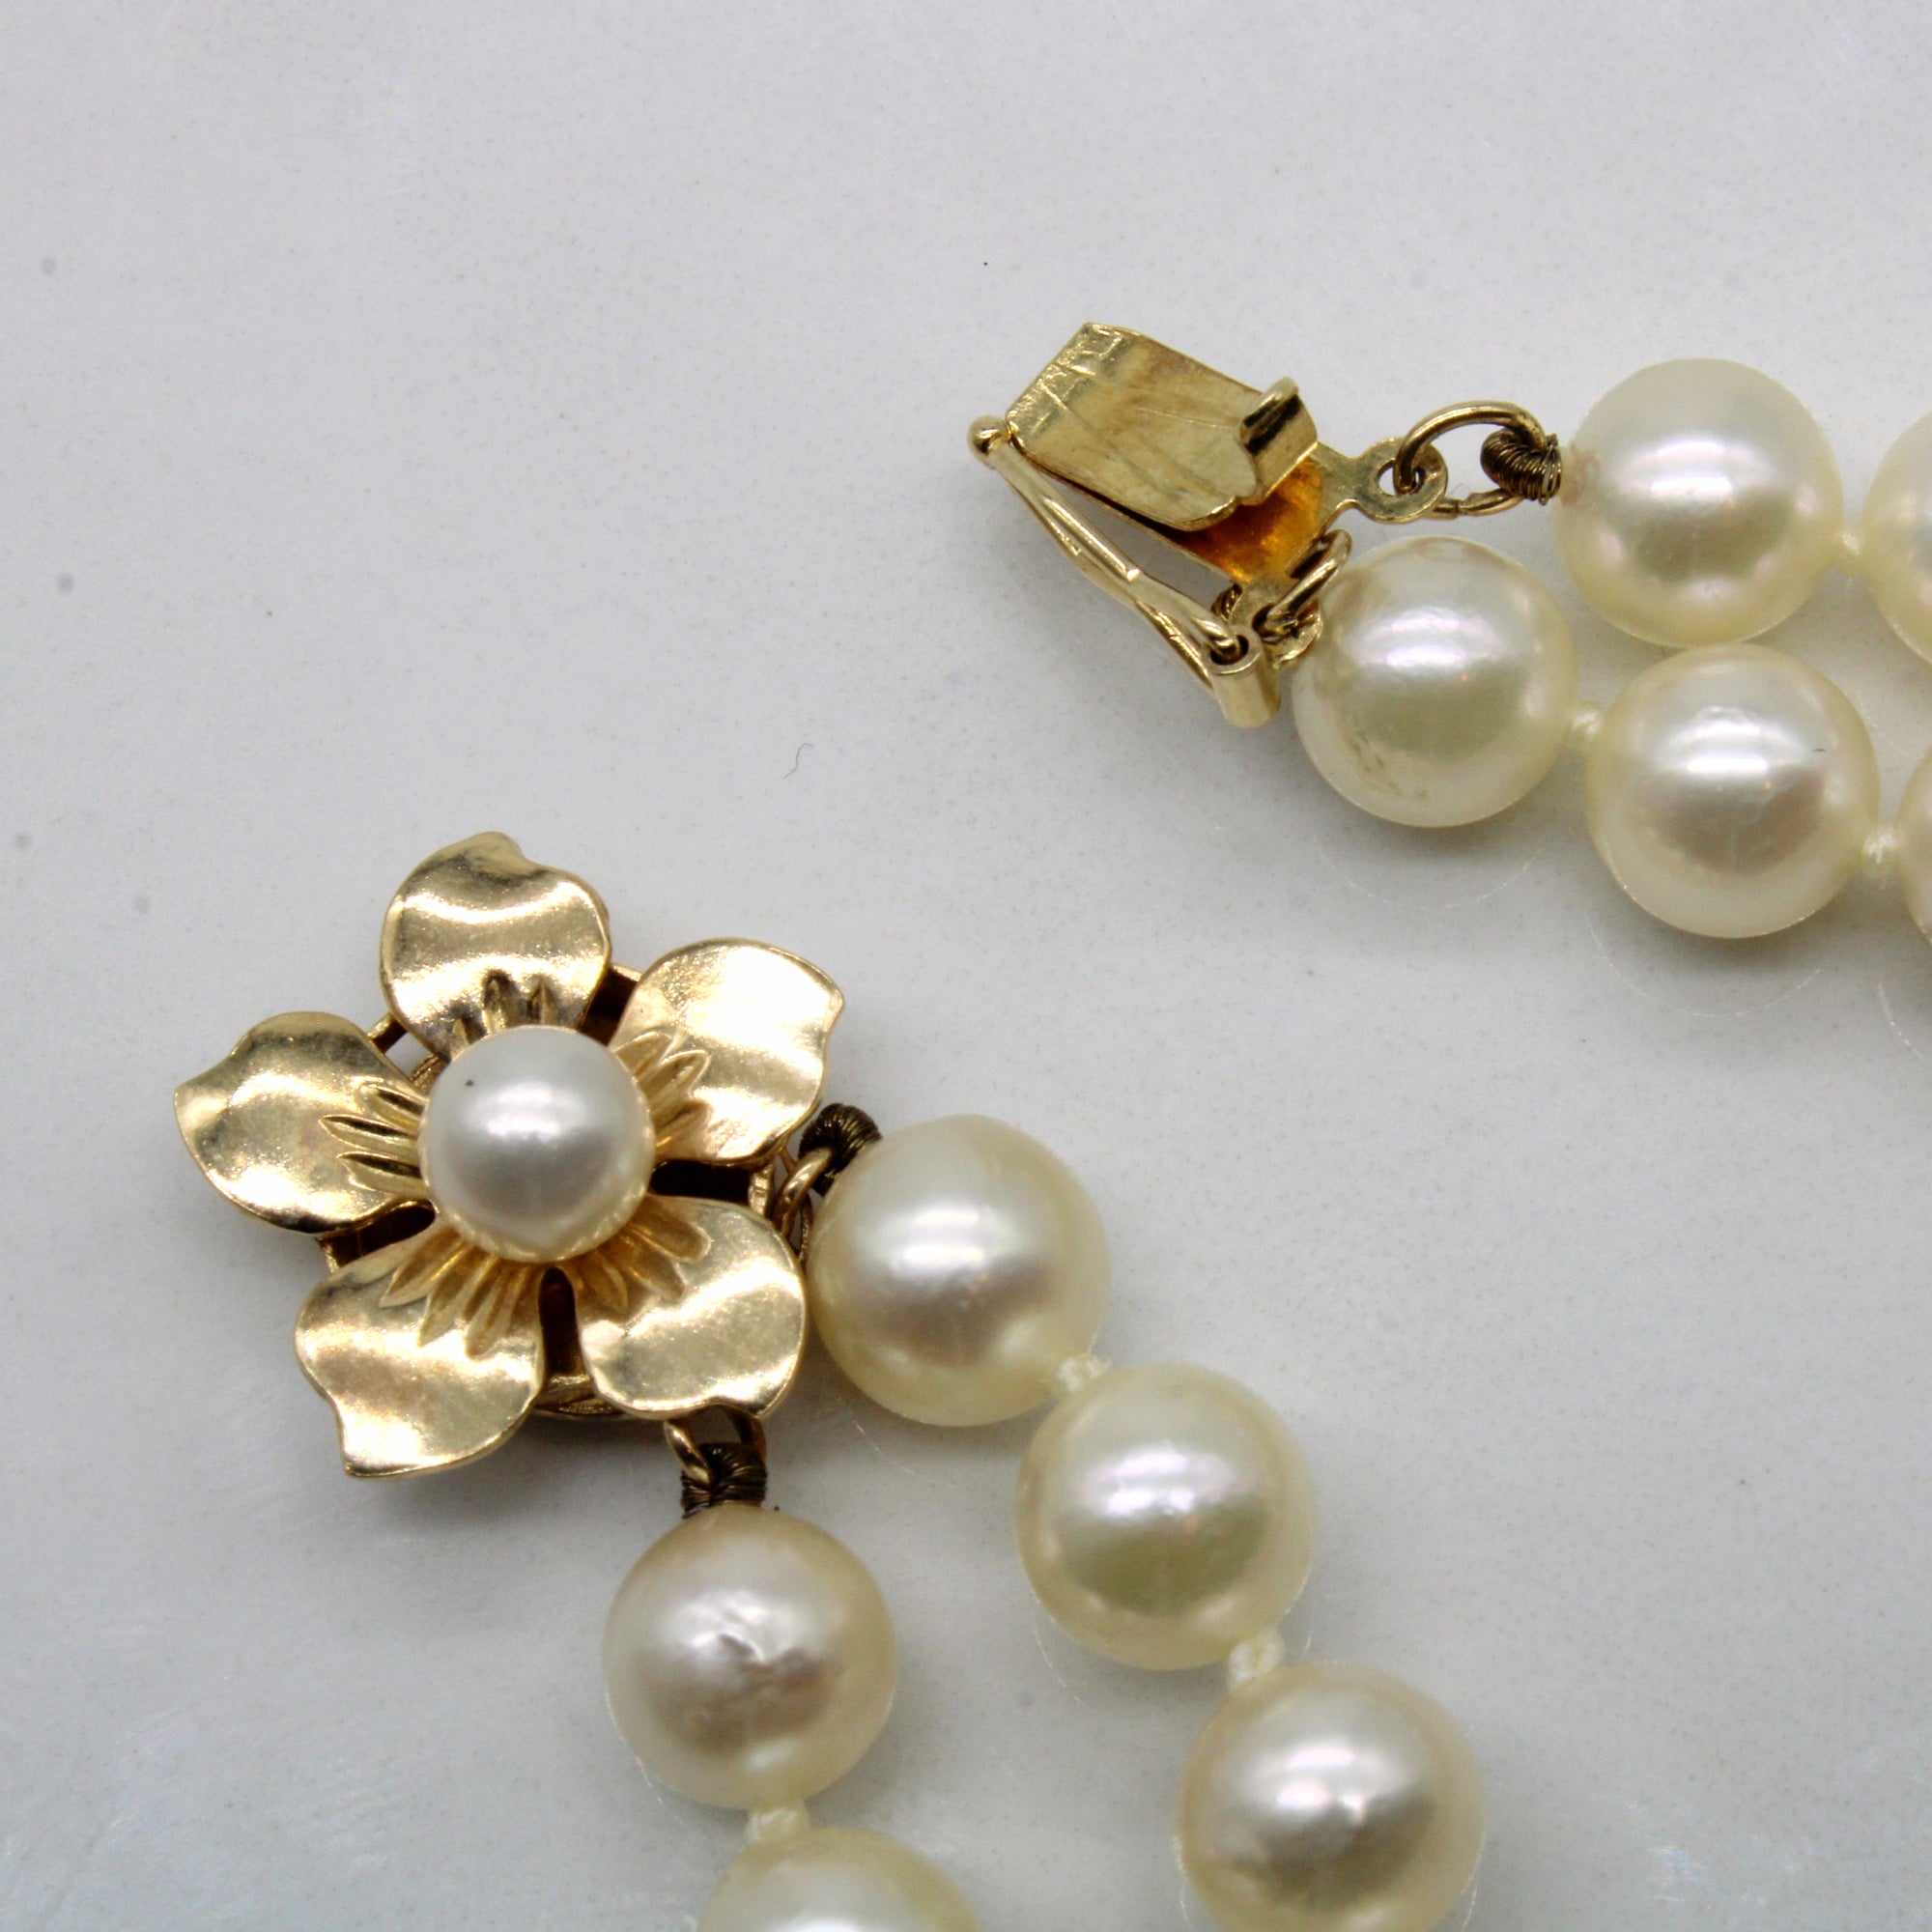 Flower Pearl Bracelet | 7.5